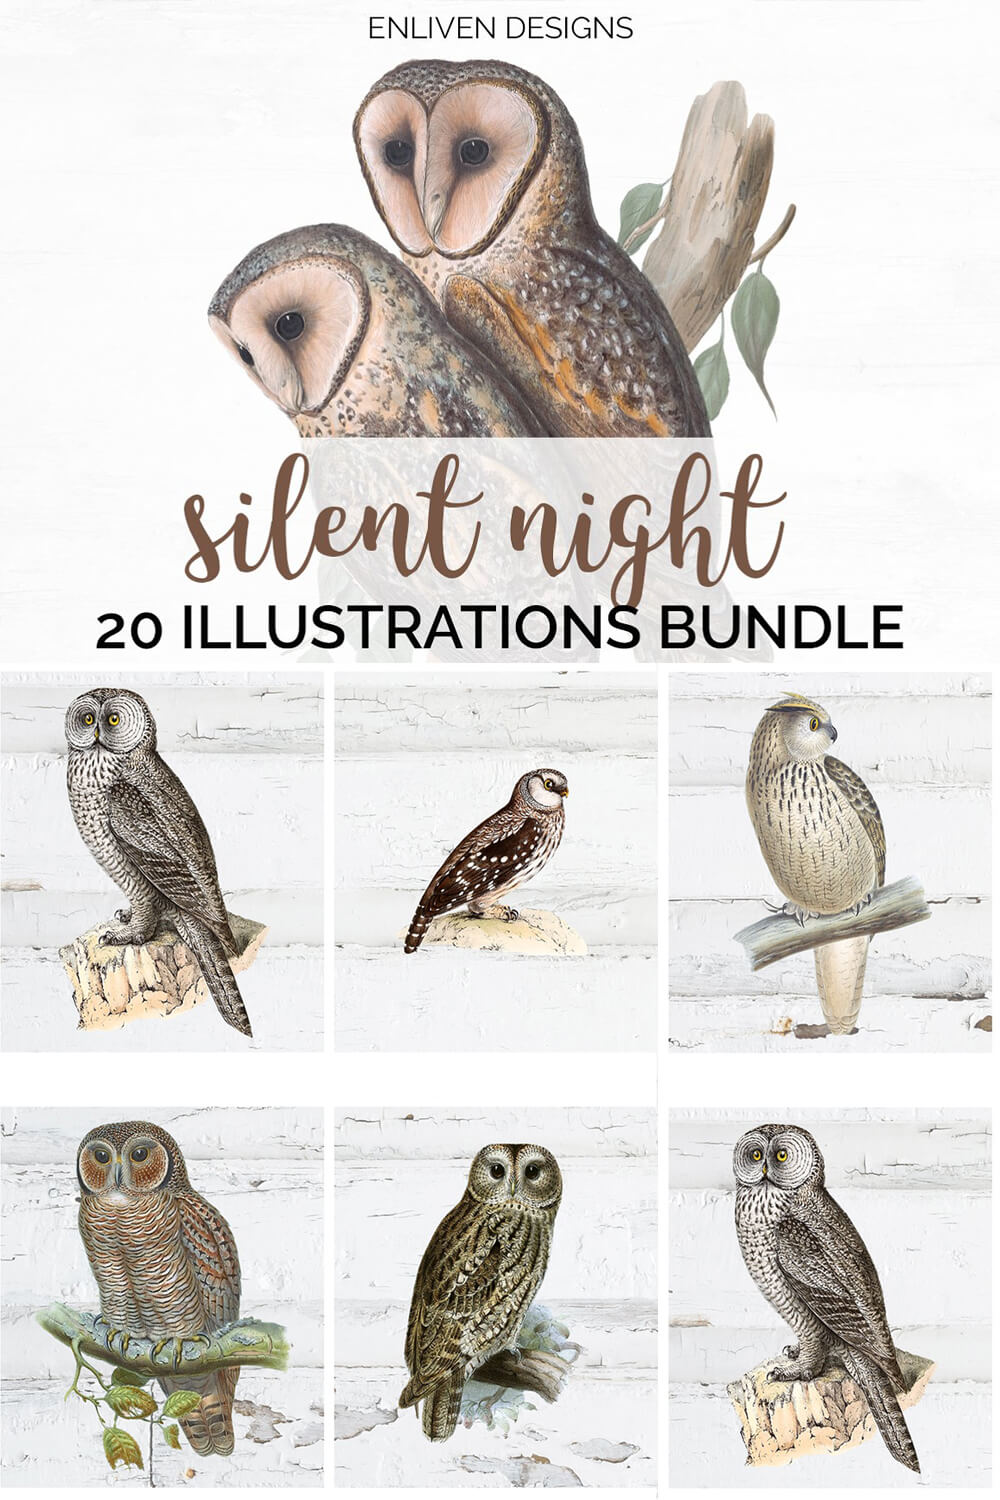 Inscription: Silent night 20 illustrations bundle.